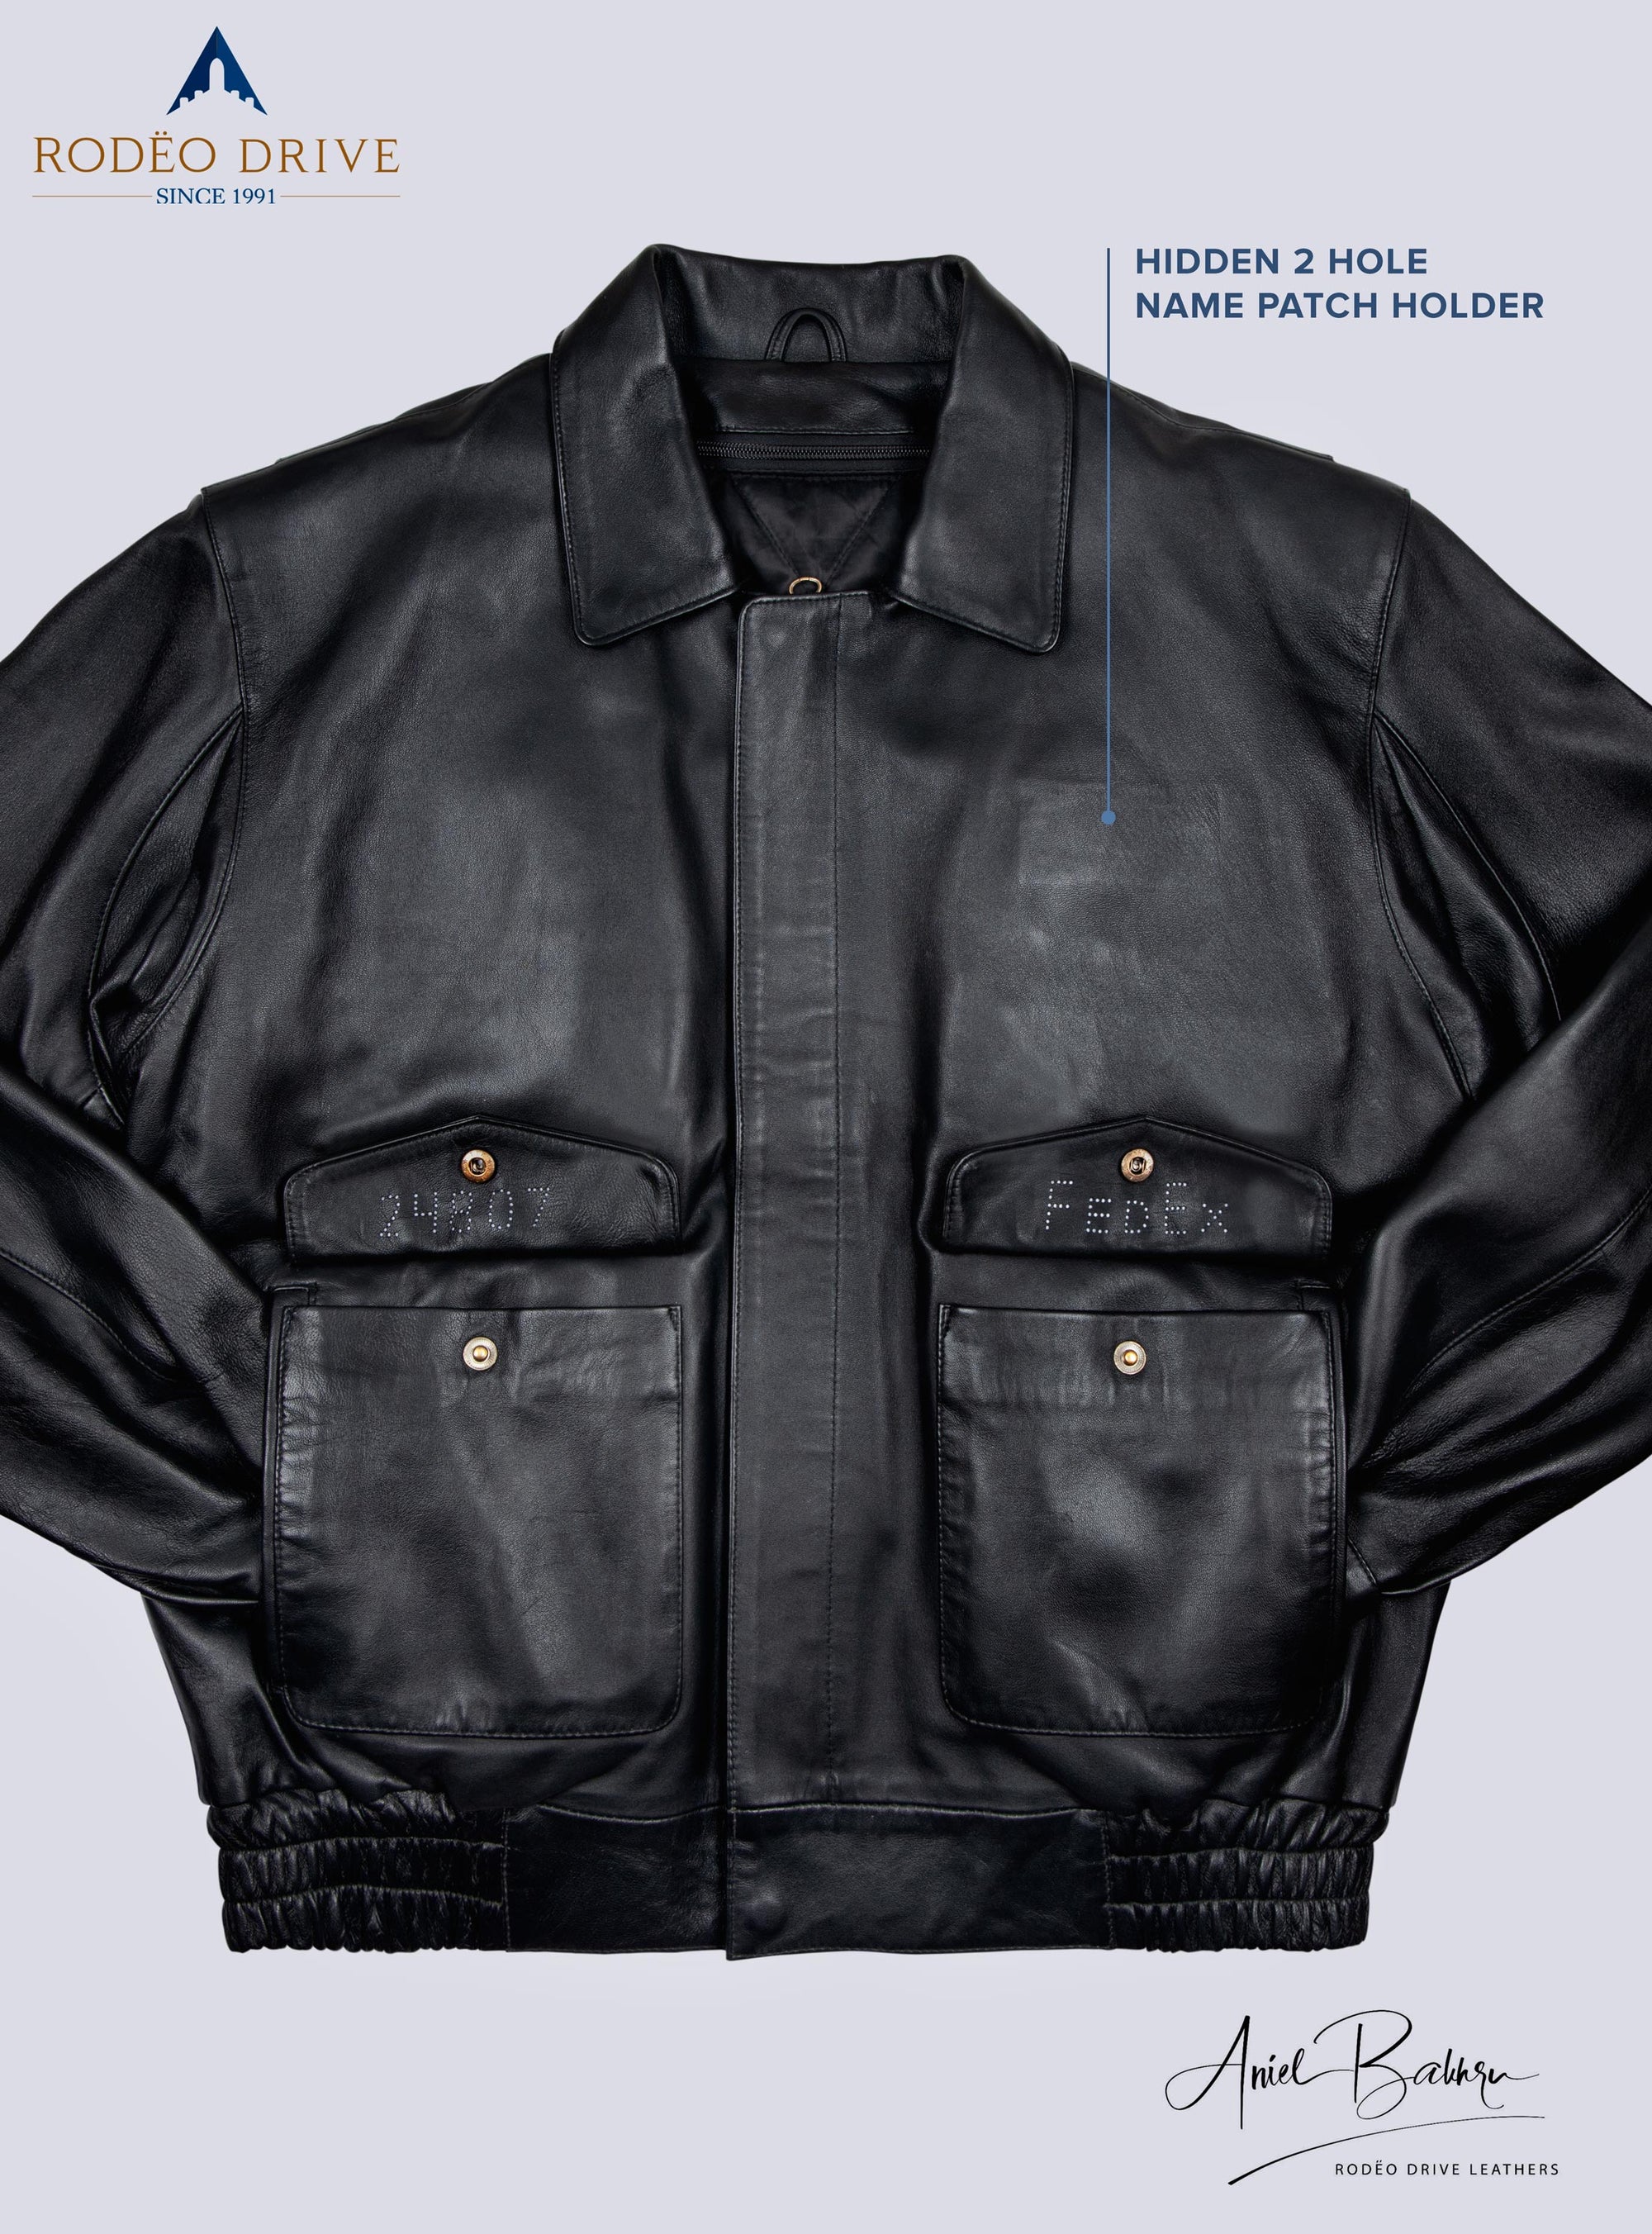 Front complete view of FedEx UNIFORM LEATHER JACKET for MEN. Both hands of jacket are tucked inside slit pockets